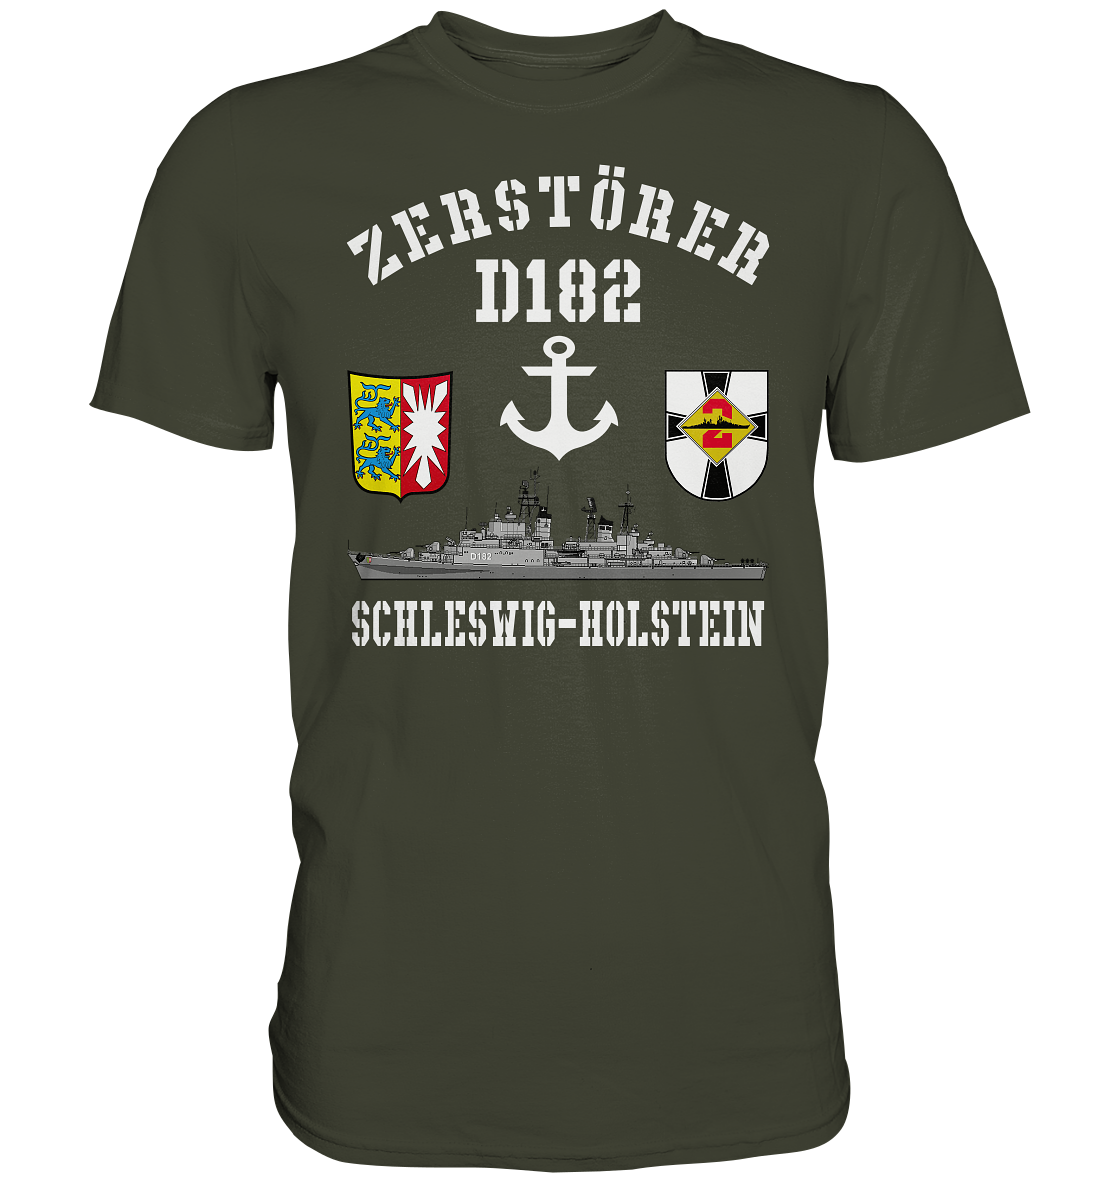 Zerstörer D182 SCHLESWIG-HOLSTEIN Anker - Premium Shirt